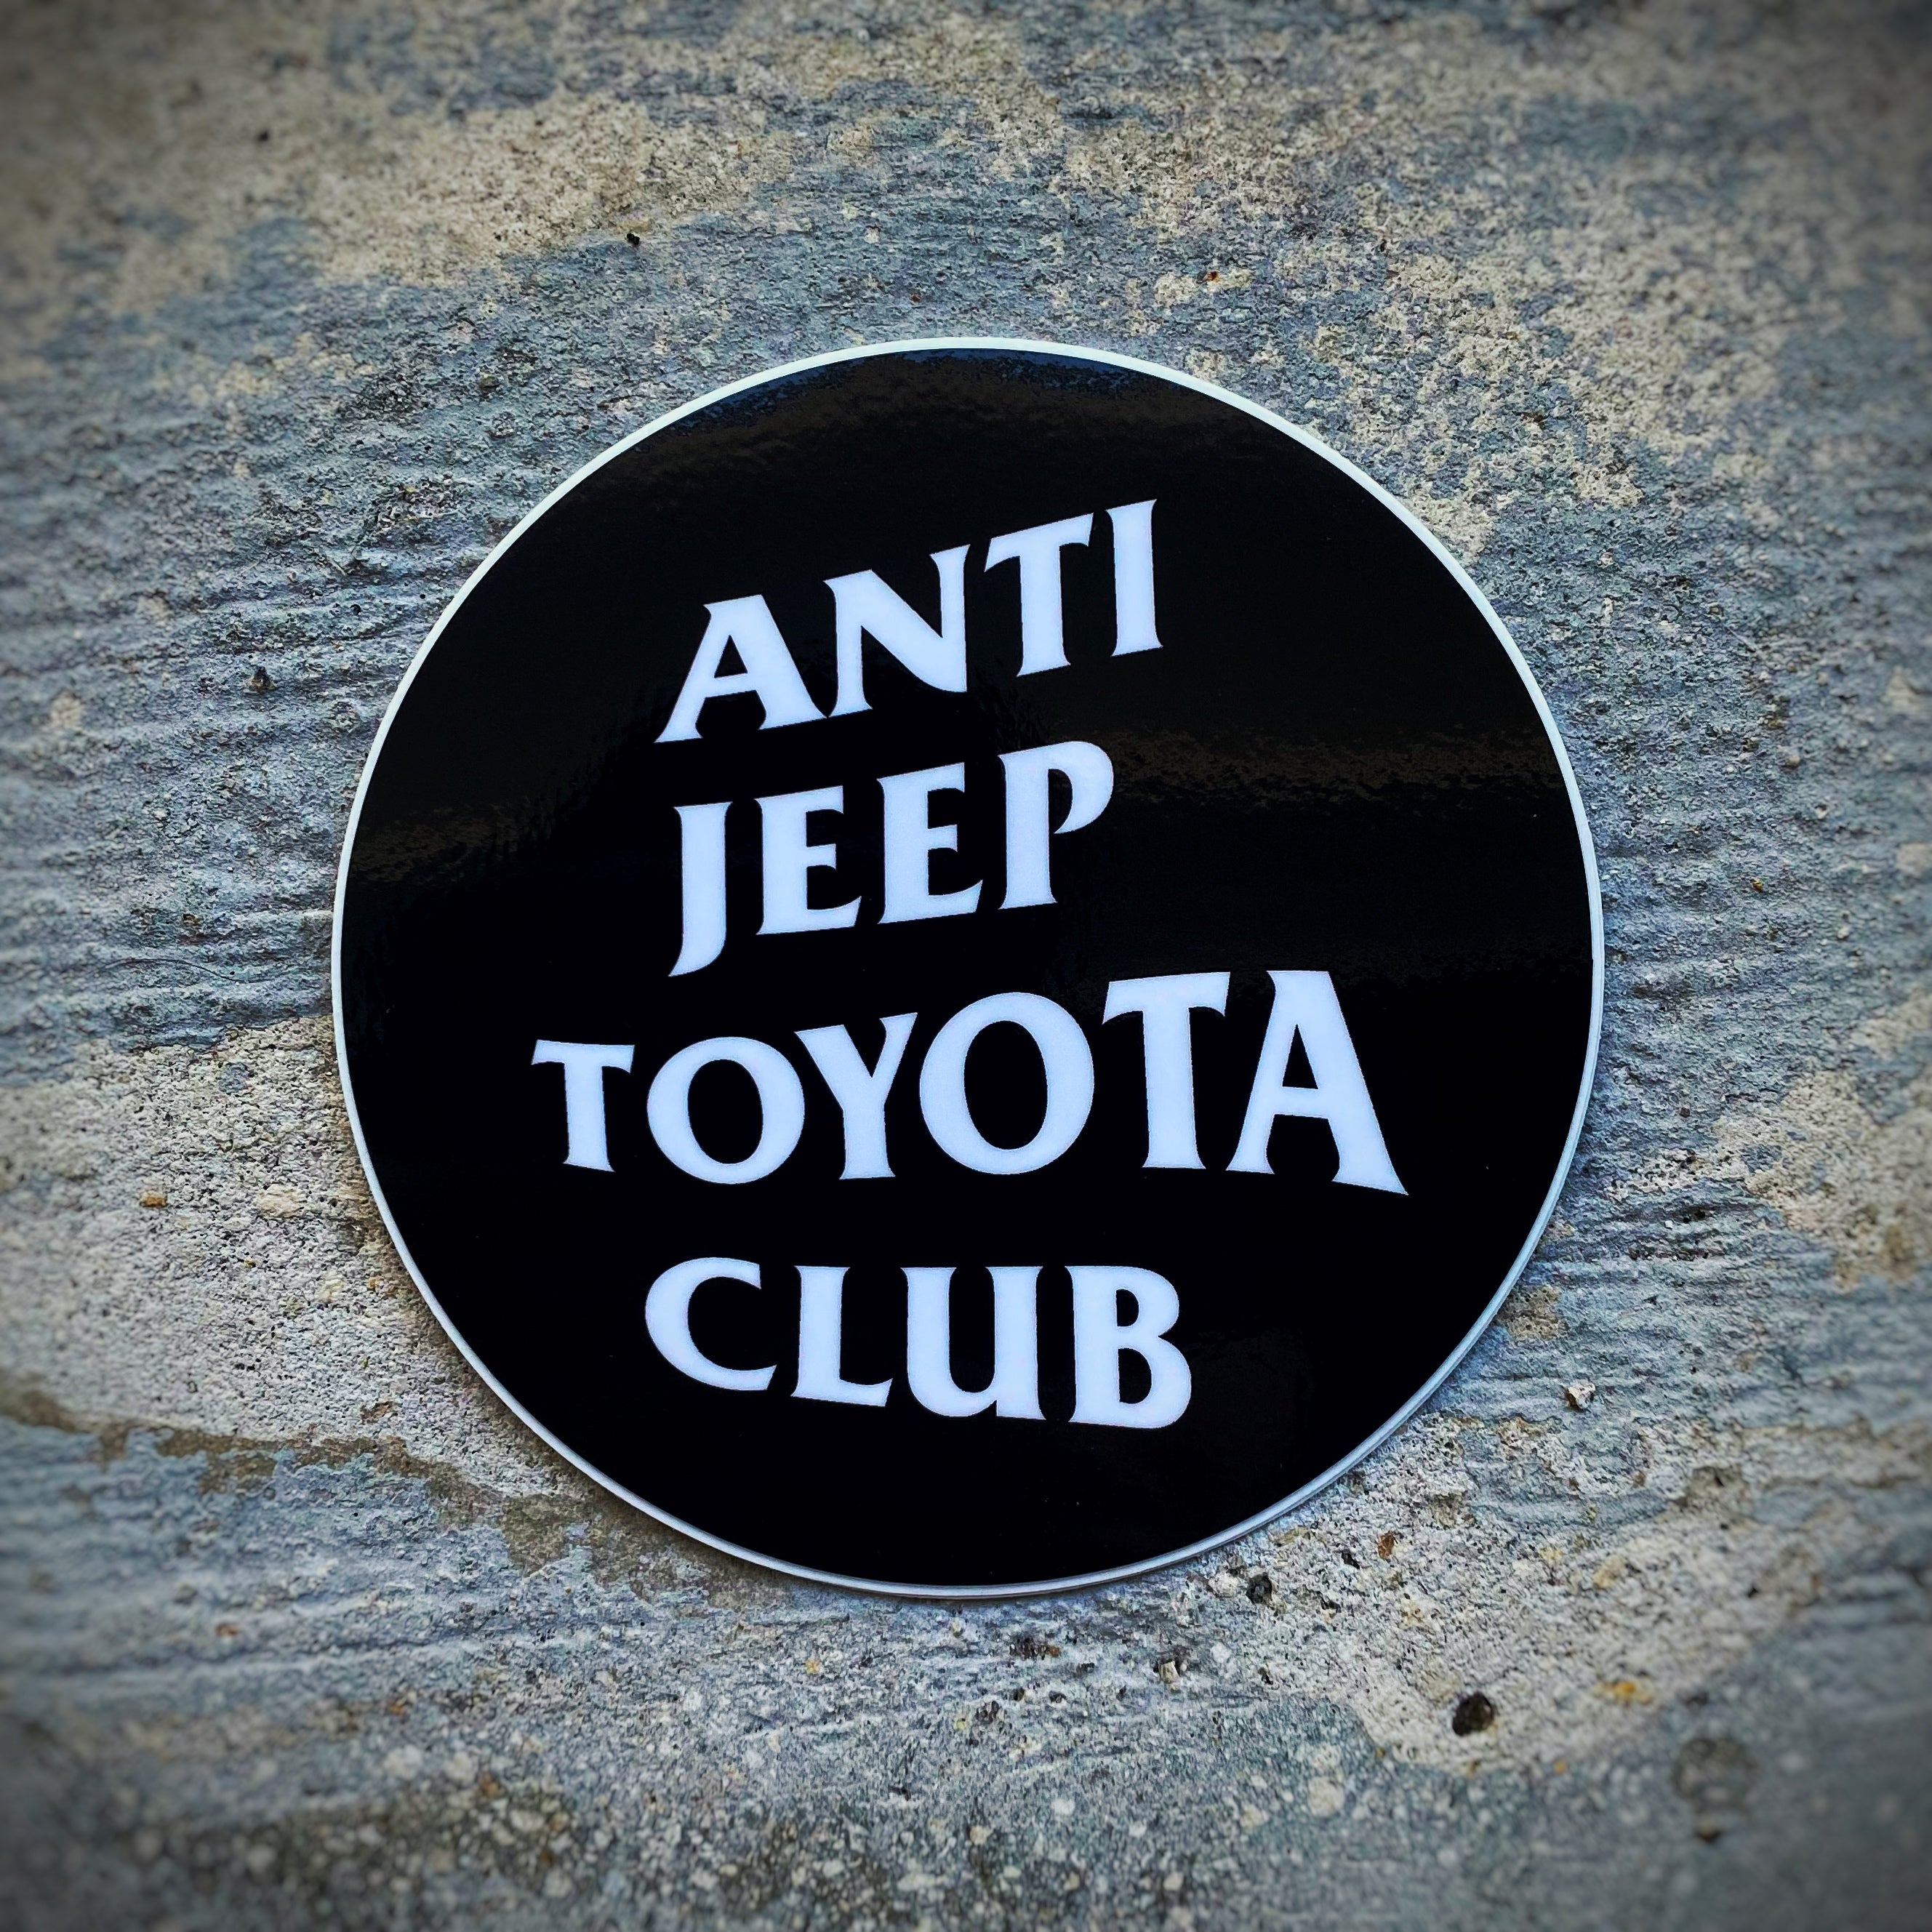 Overland Goons™️ “Anti Jeep Yota Club” Sticker